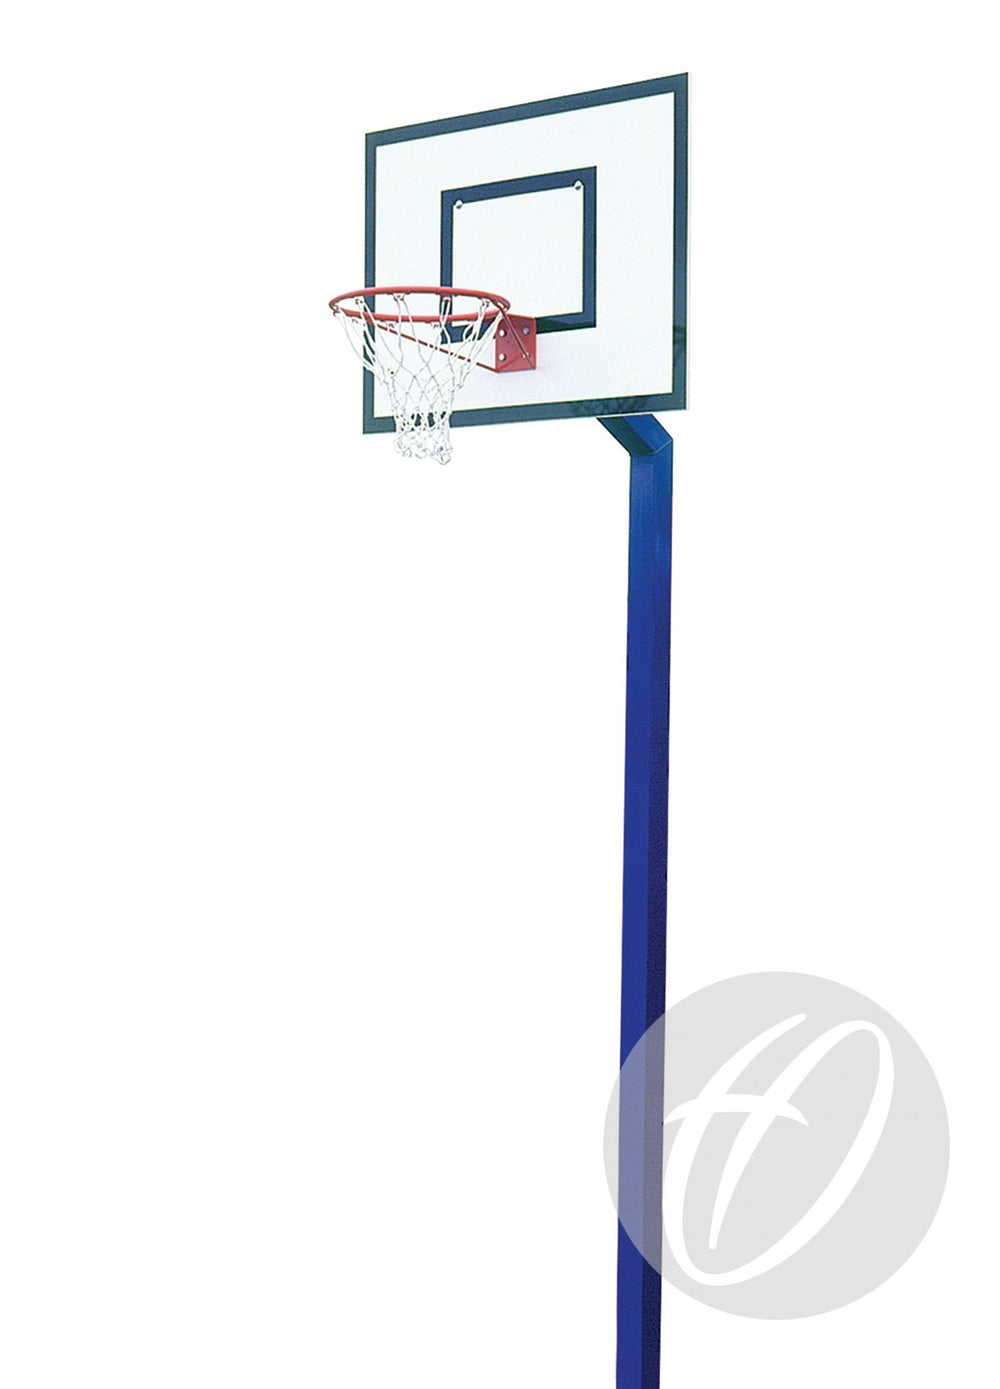 Mini Basketball Goals - Socketed